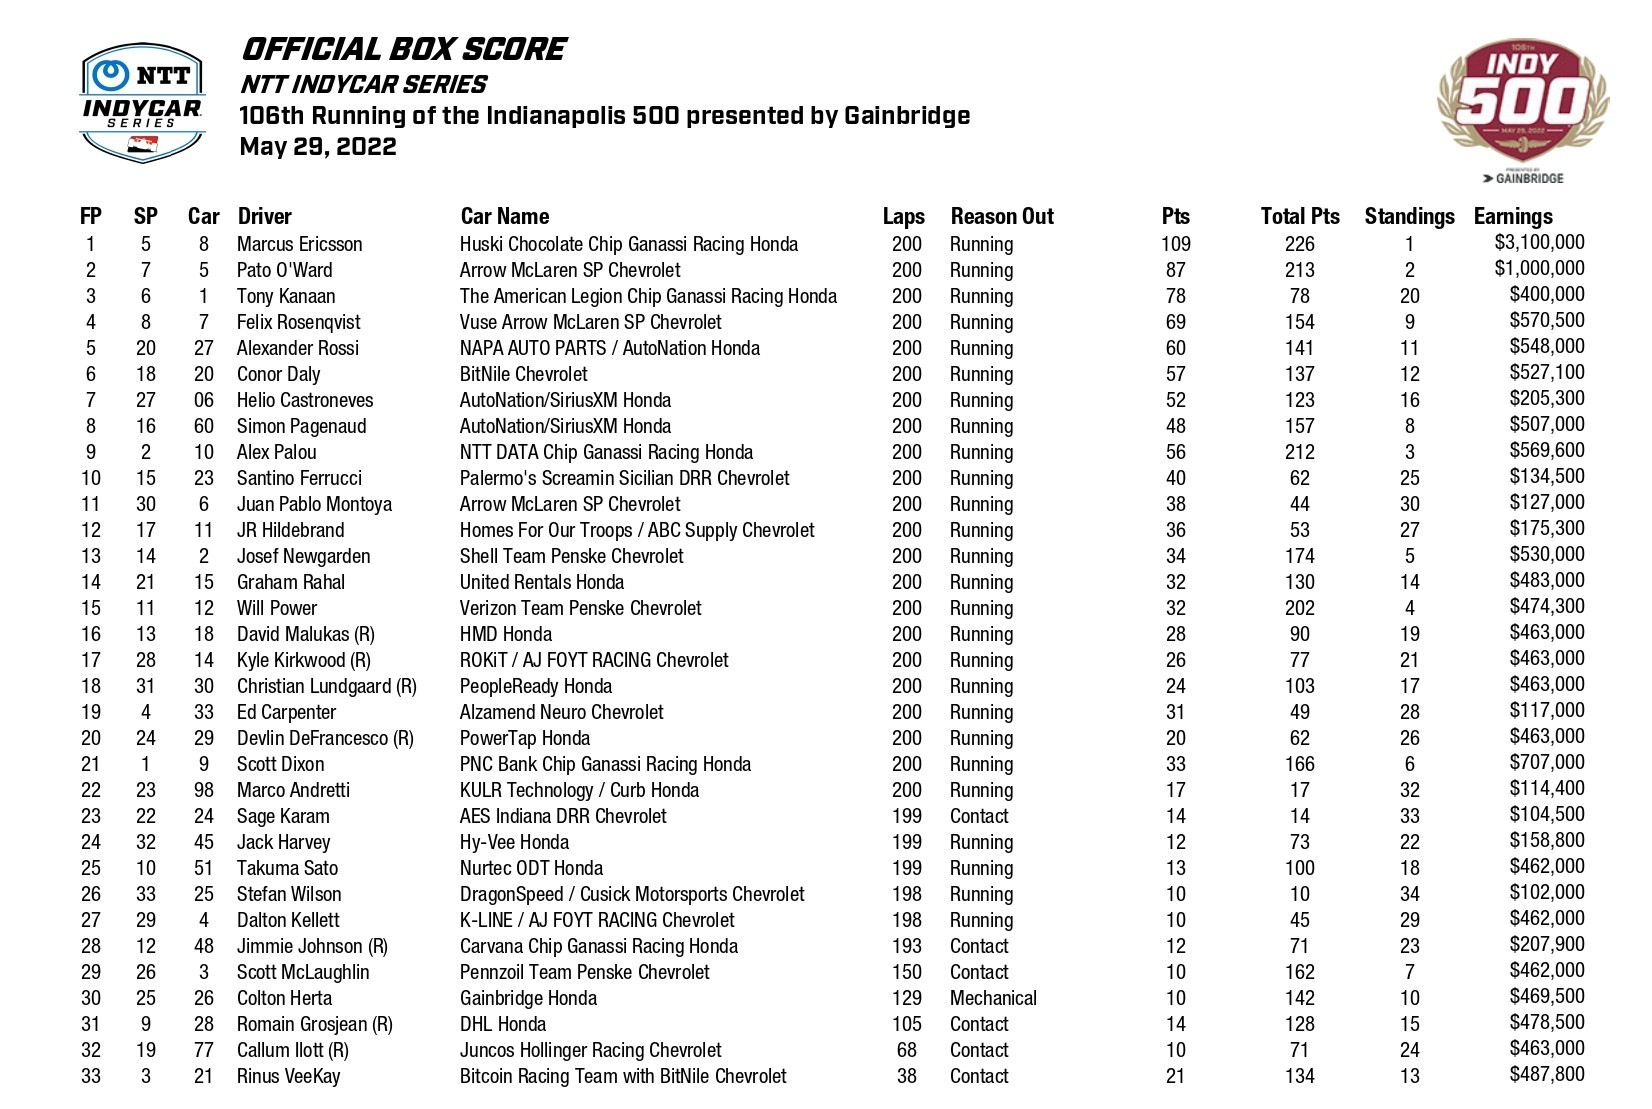 Marcus Ericsson - Indy 500 - premios - 3,1 millones de dolares - ganancias